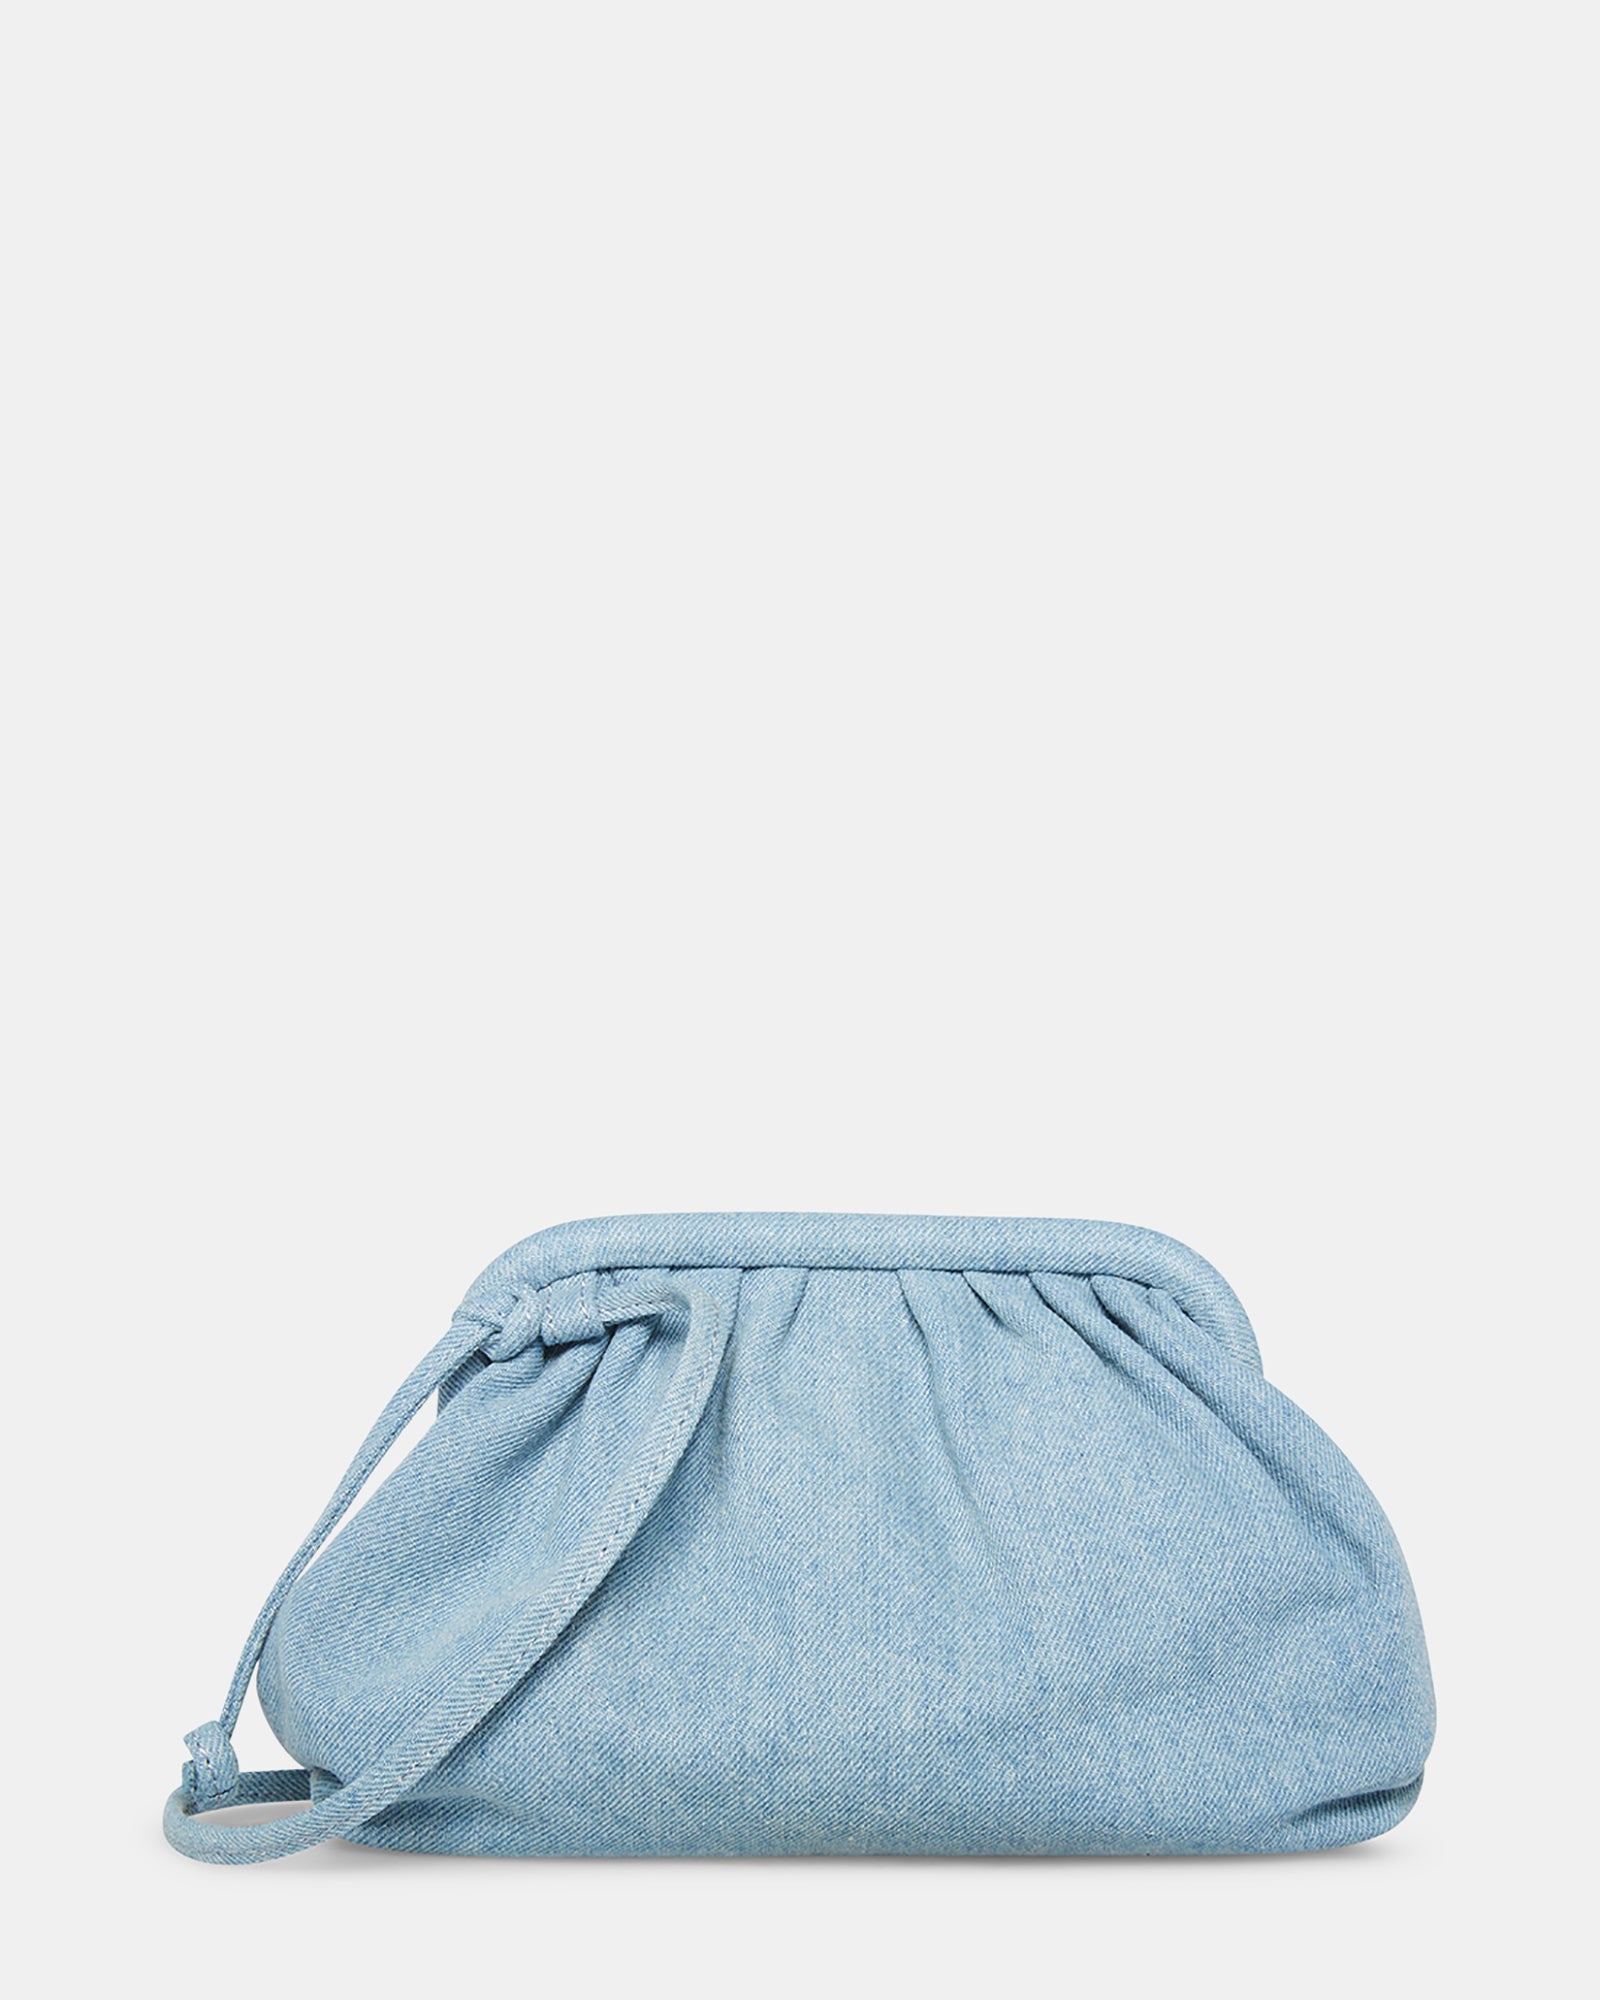 Nikki Bag Denim Fabric Clutch | ONESZ | by Steve Madden